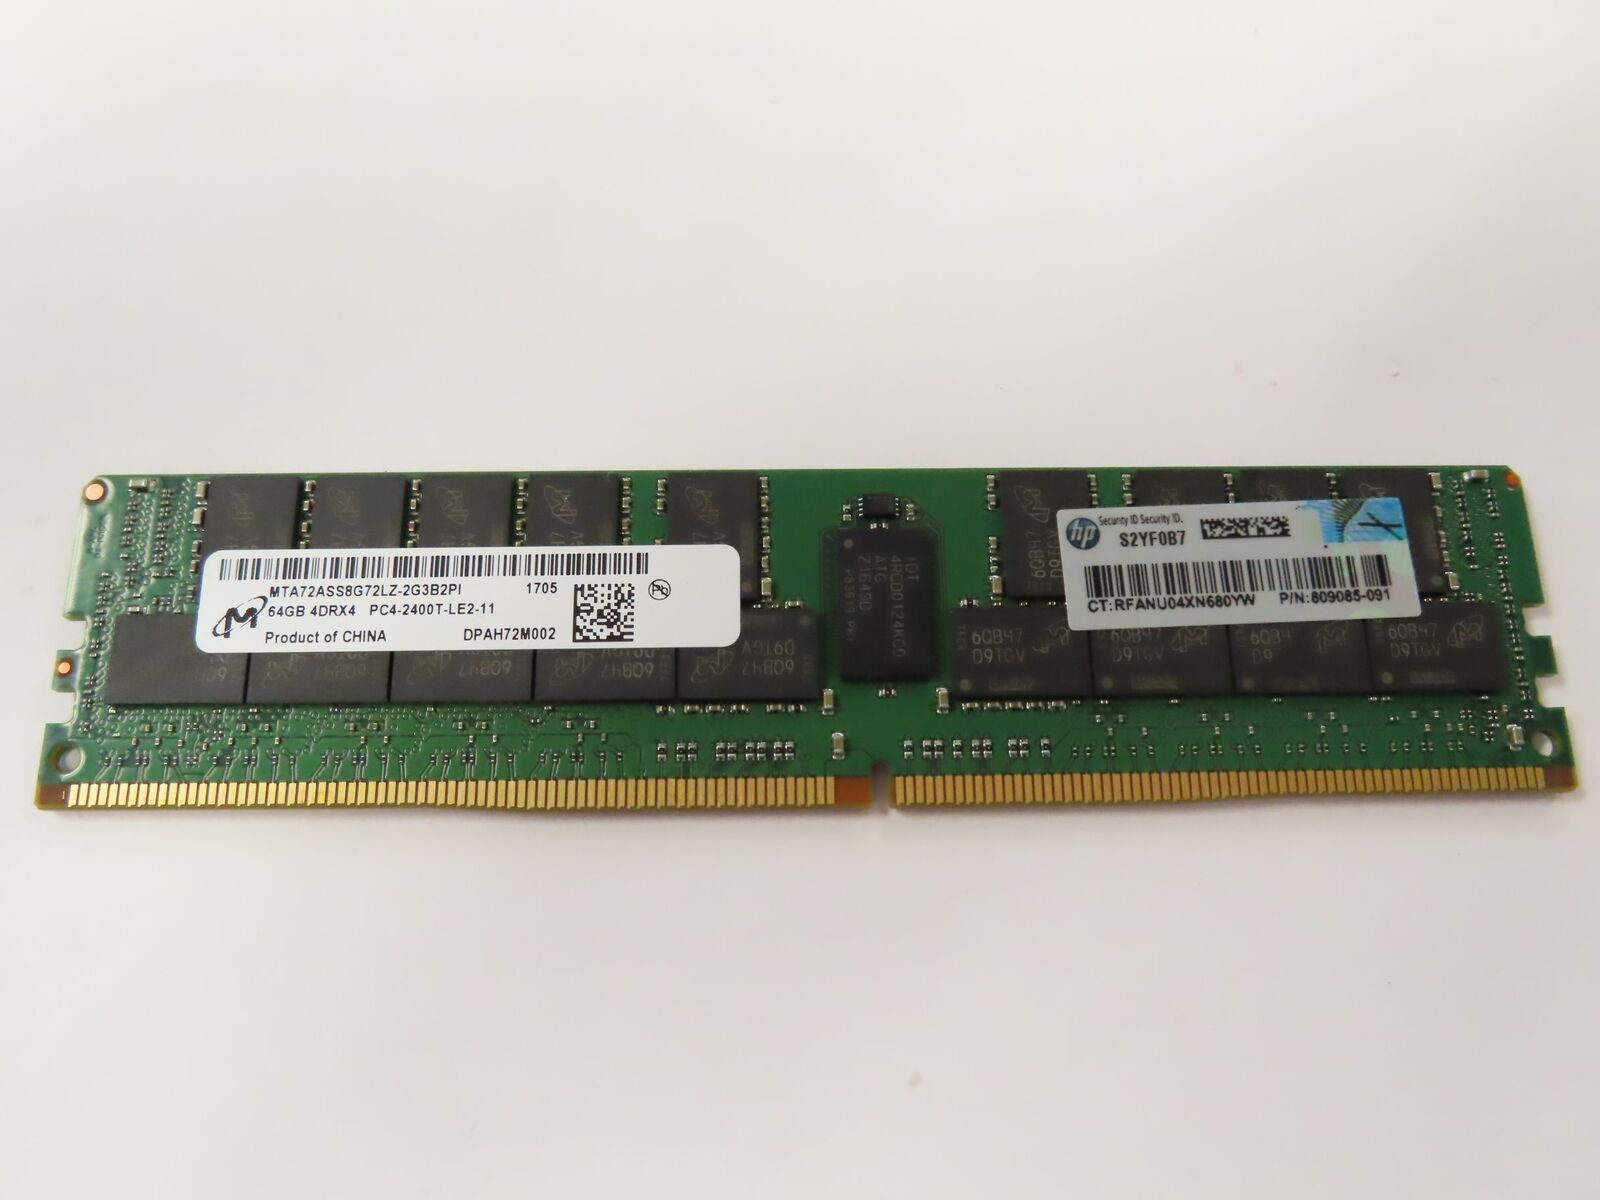 Micron 64GB DDR4 PC4-2400T 4DRx4 Server Memory _ HP 809085-091